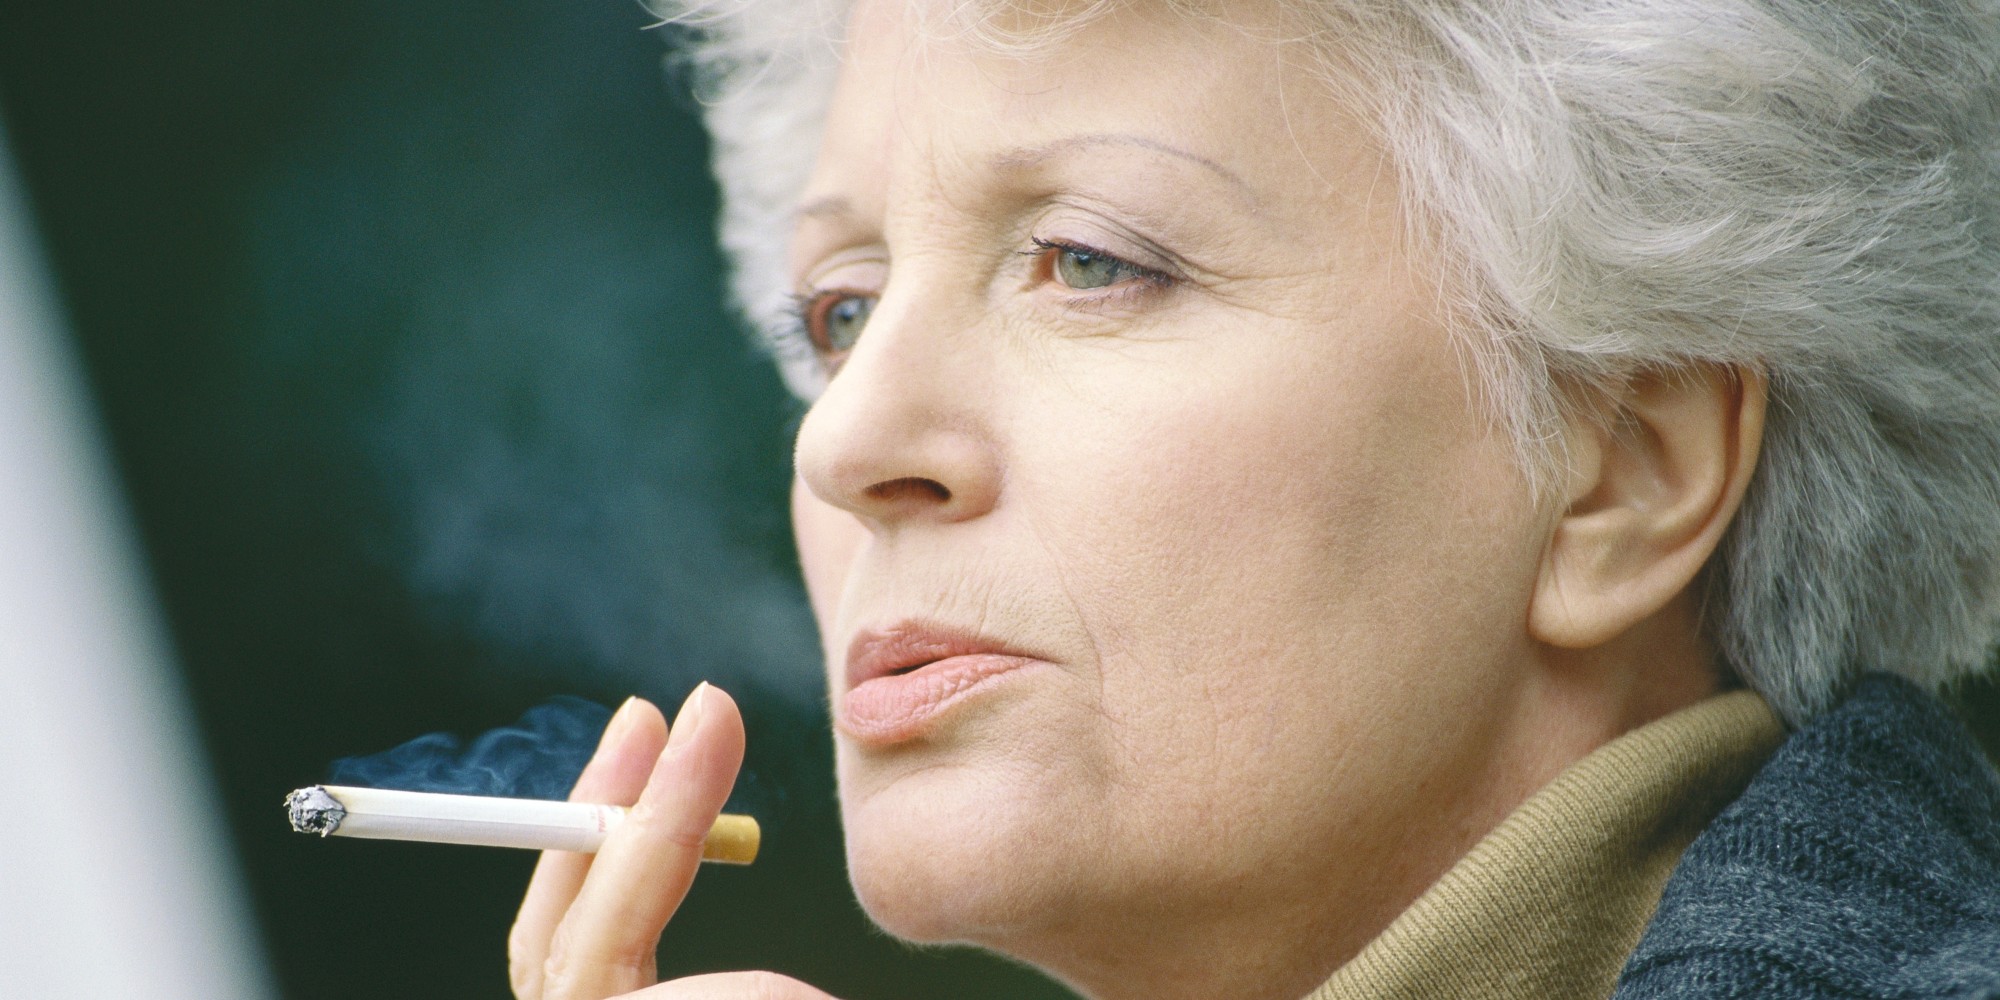 stroke smoking habits causes mature woman older unhealthy smoke signs lifestyle eric risk grandma smoker longevity study hair symptoms health